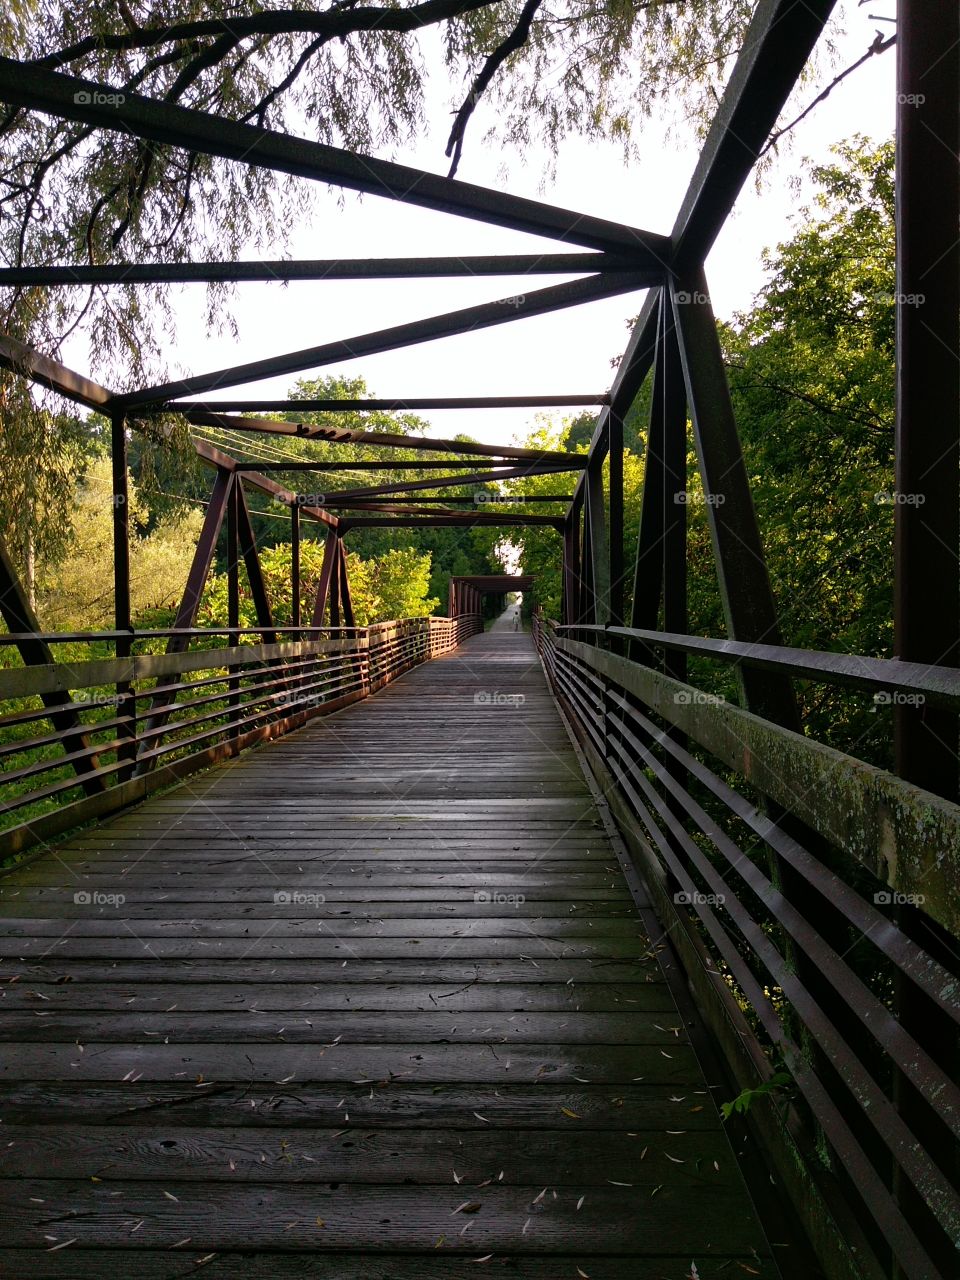 Walk on the bridge